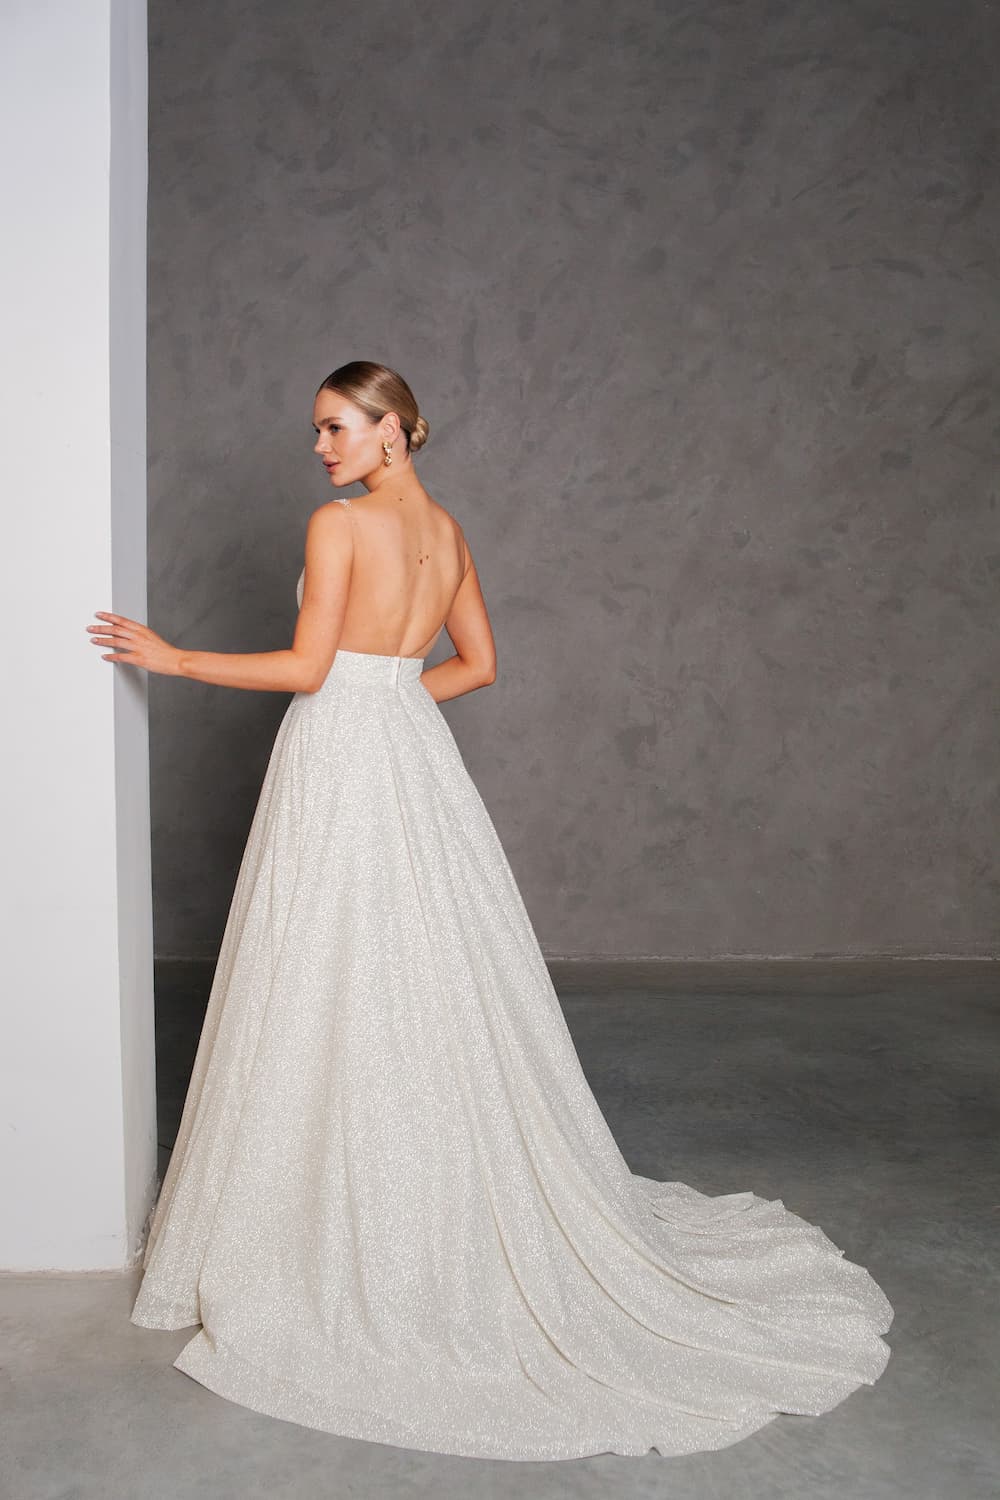 Rara Avis open back wedding dress Milay at Dell'Amore Bridal, NZ. 2